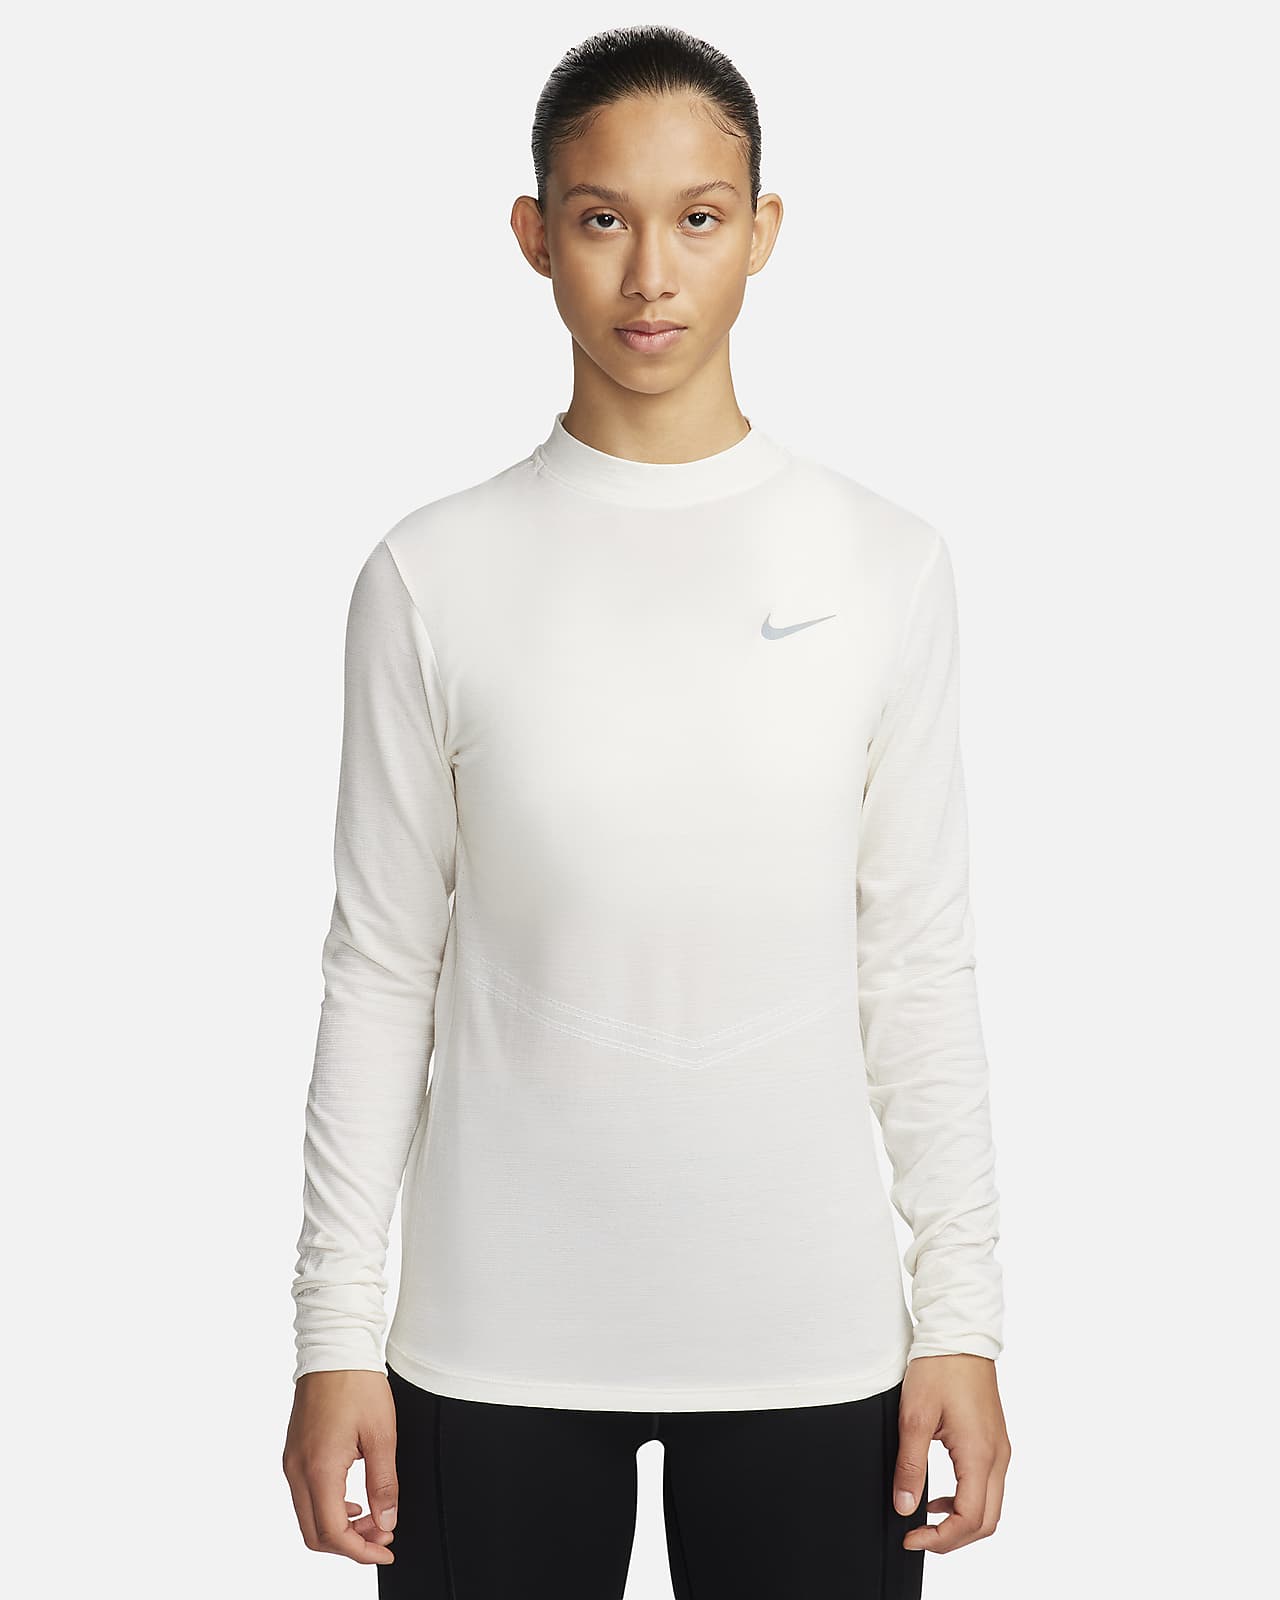 Nike Swift Dri-FIT álgalléros, hosszú ujjú női futófelső